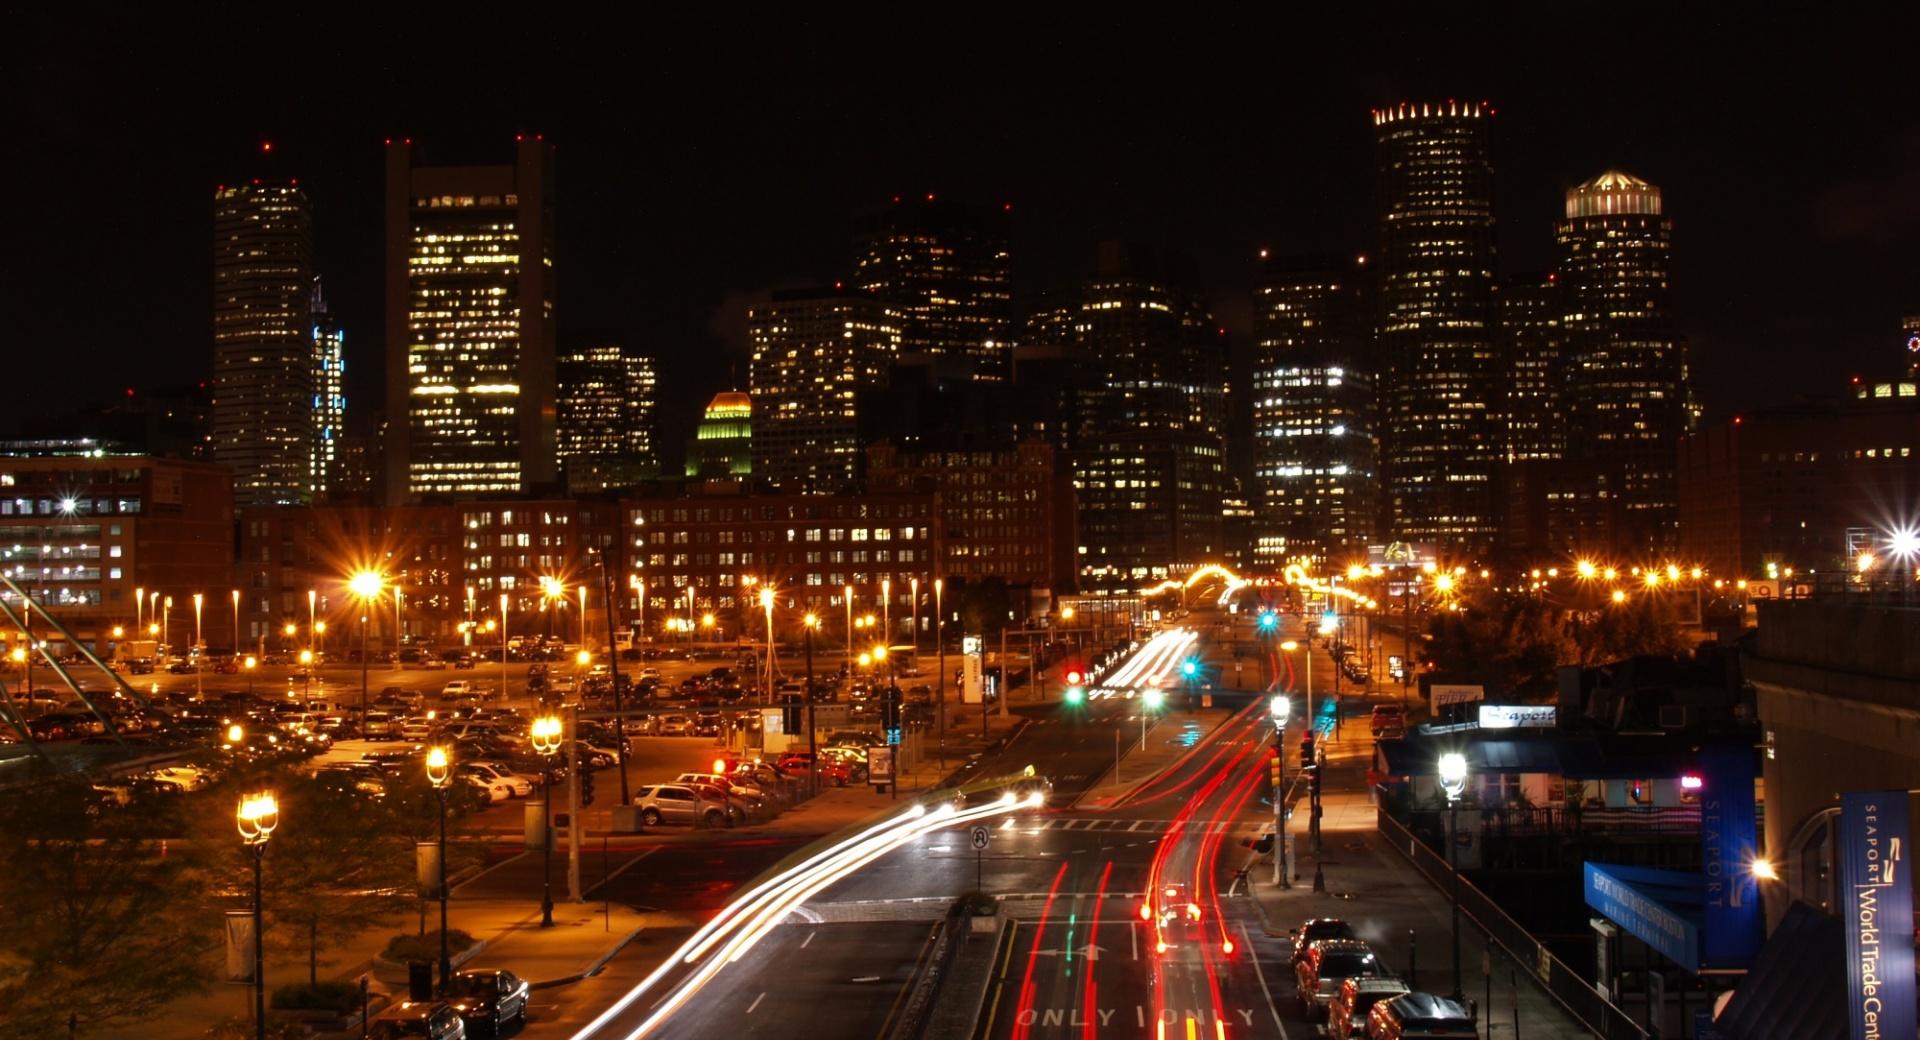 Boston Night Traffic at 1024 x 1024 iPad size wallpapers HD quality